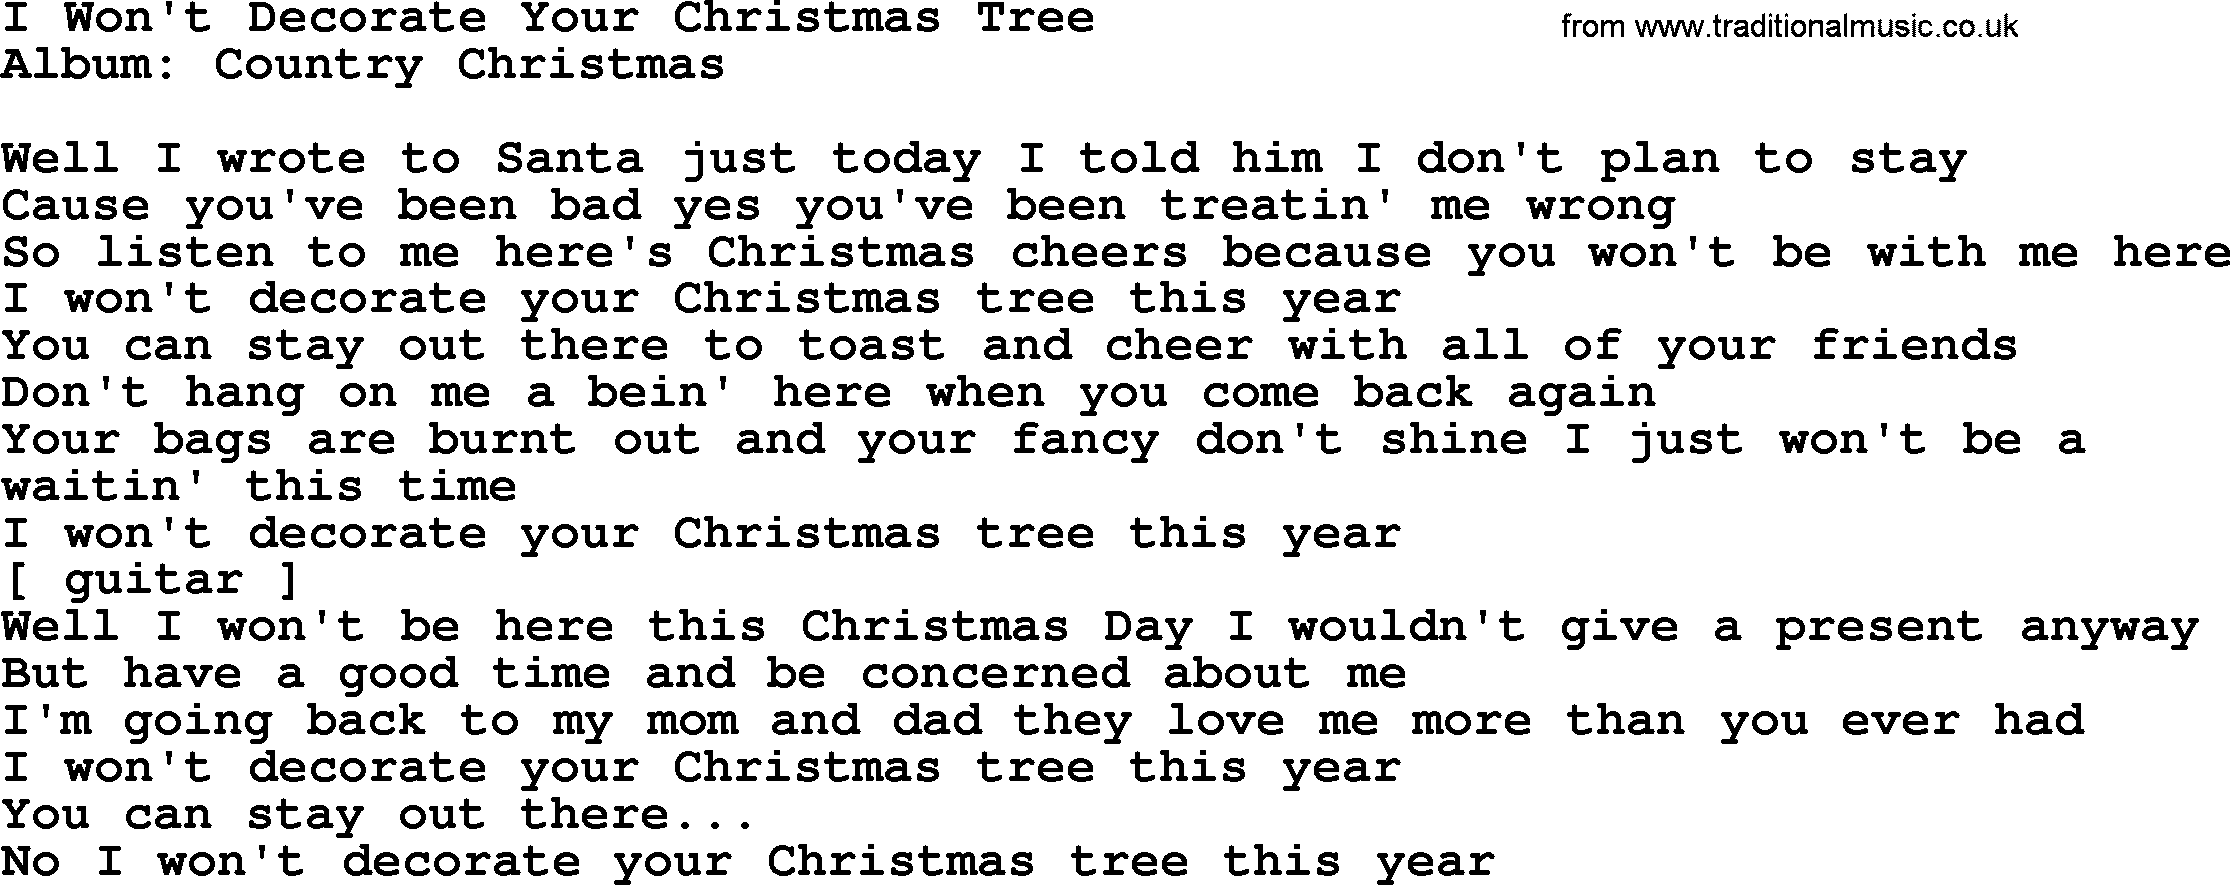 Loretta Lynn song: I Won't Decorate Your Christmas Tree lyrics